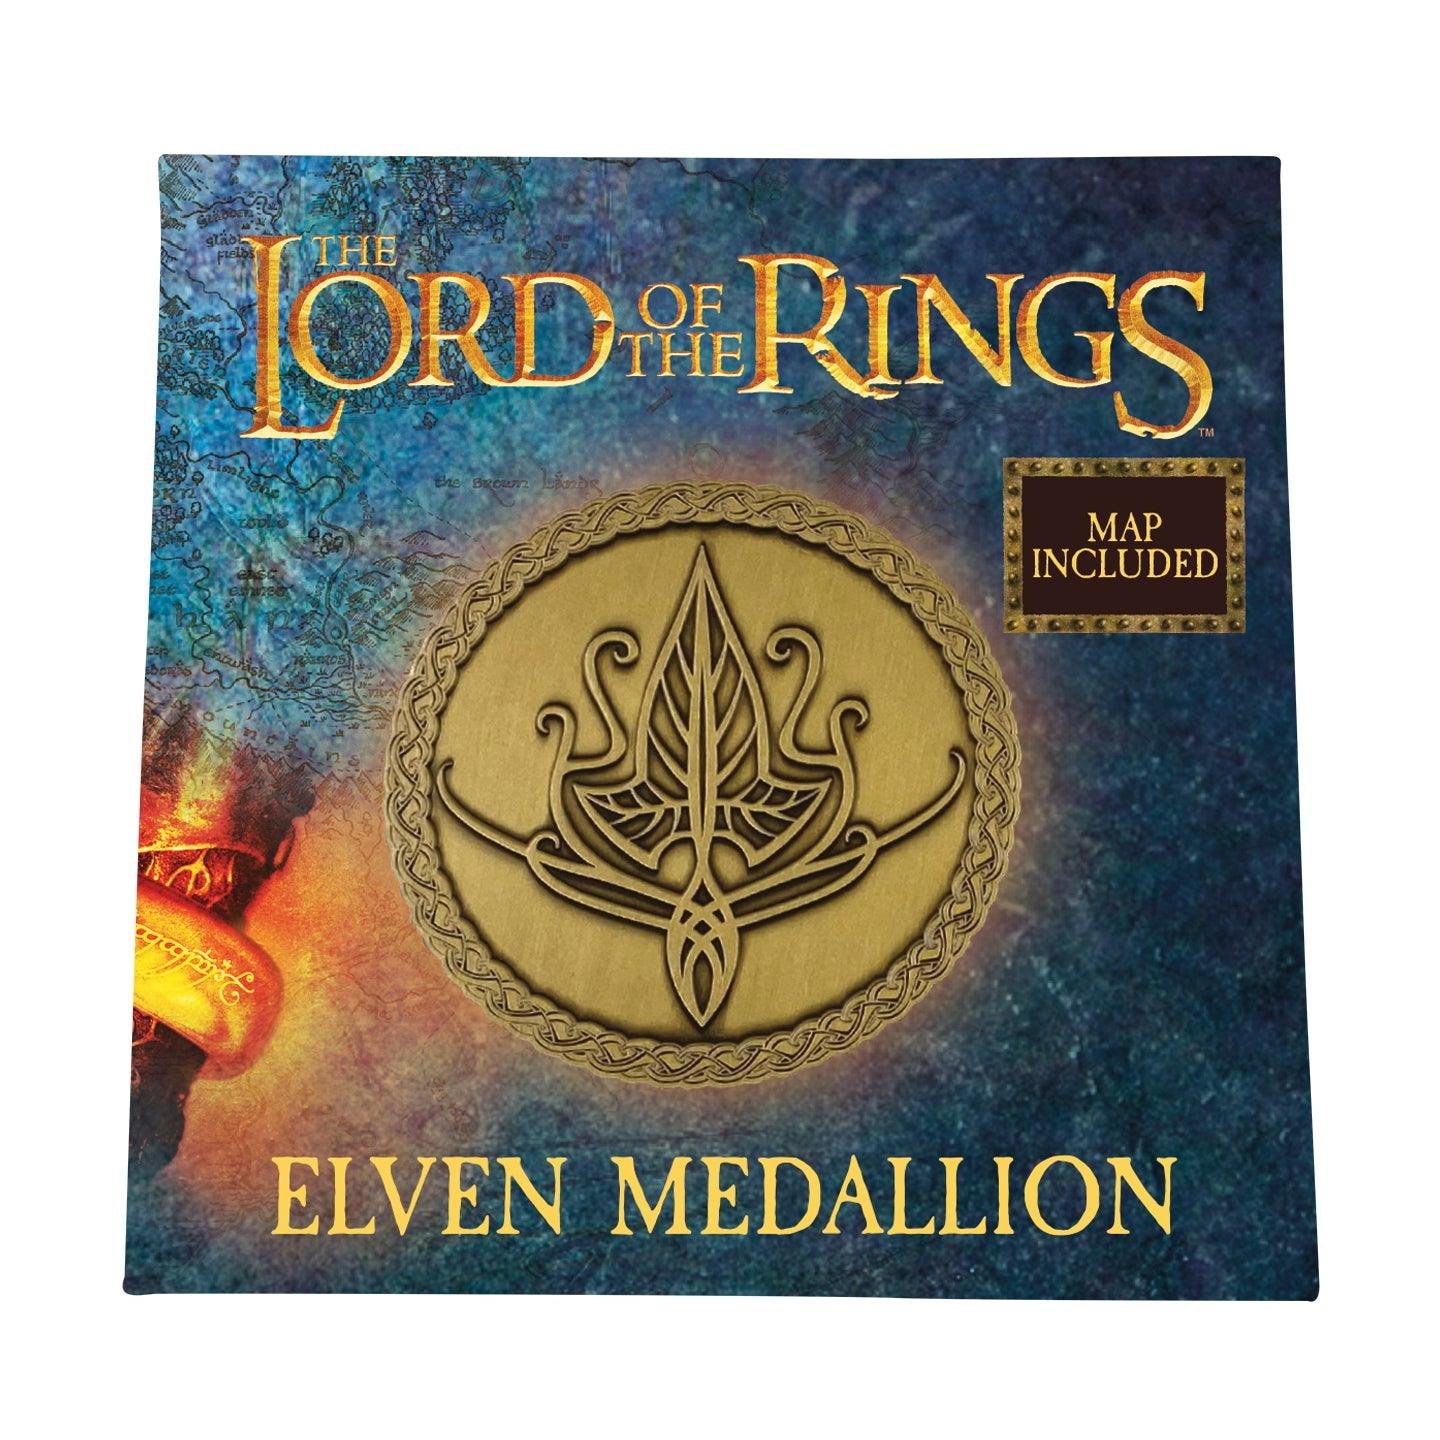 Medallion Lotr Elven - Want a New Gadget